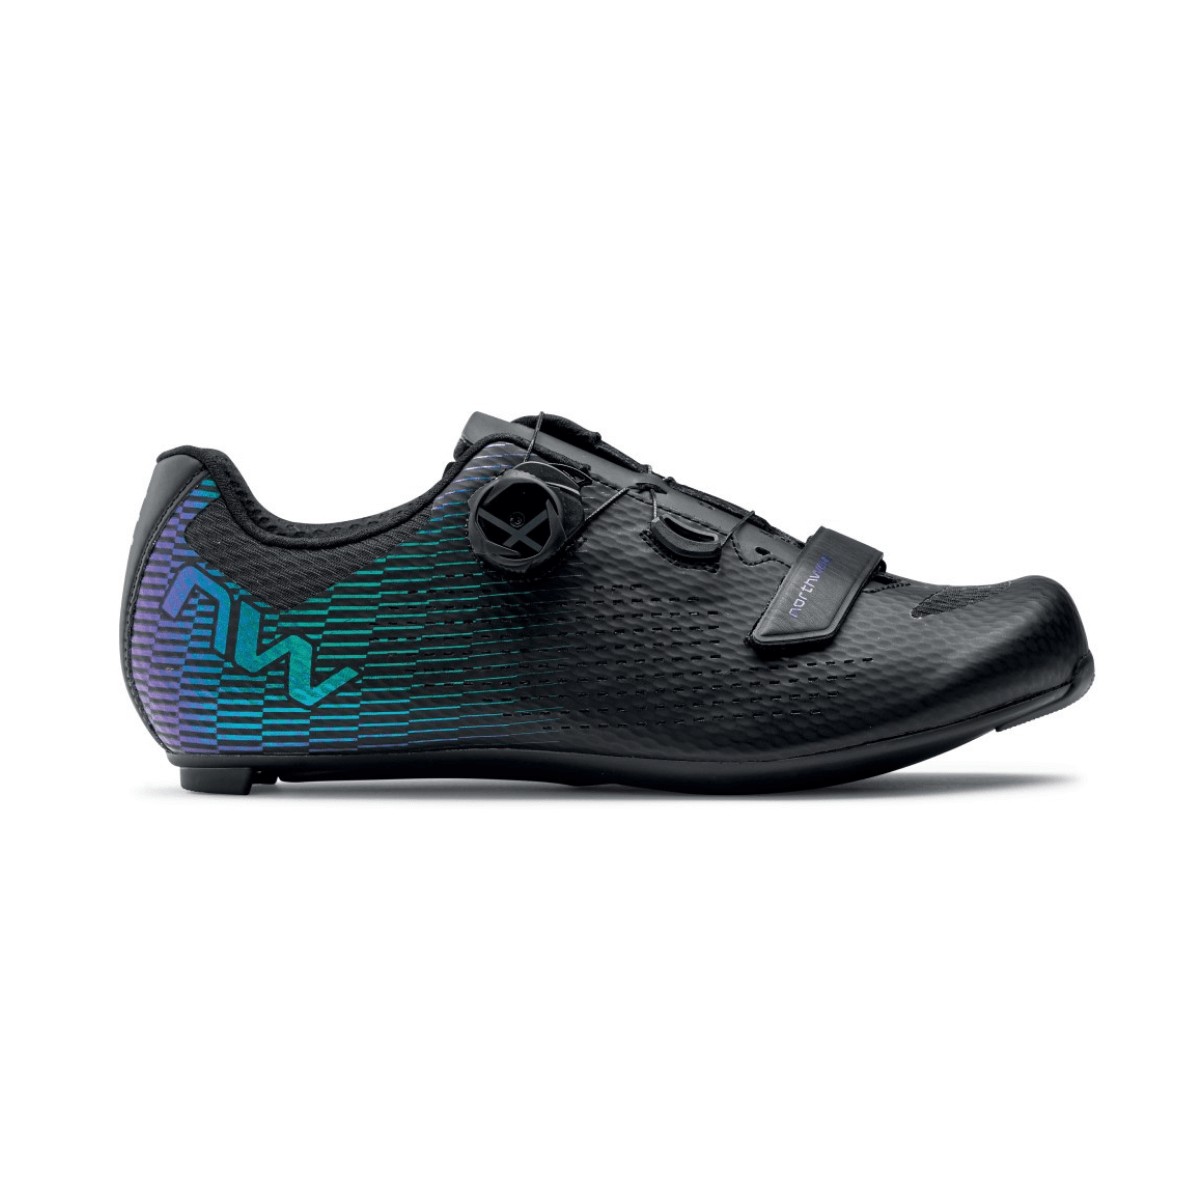 Chaussures Northwave Storm Carbon 2 Noir, Taille 45 - EUR